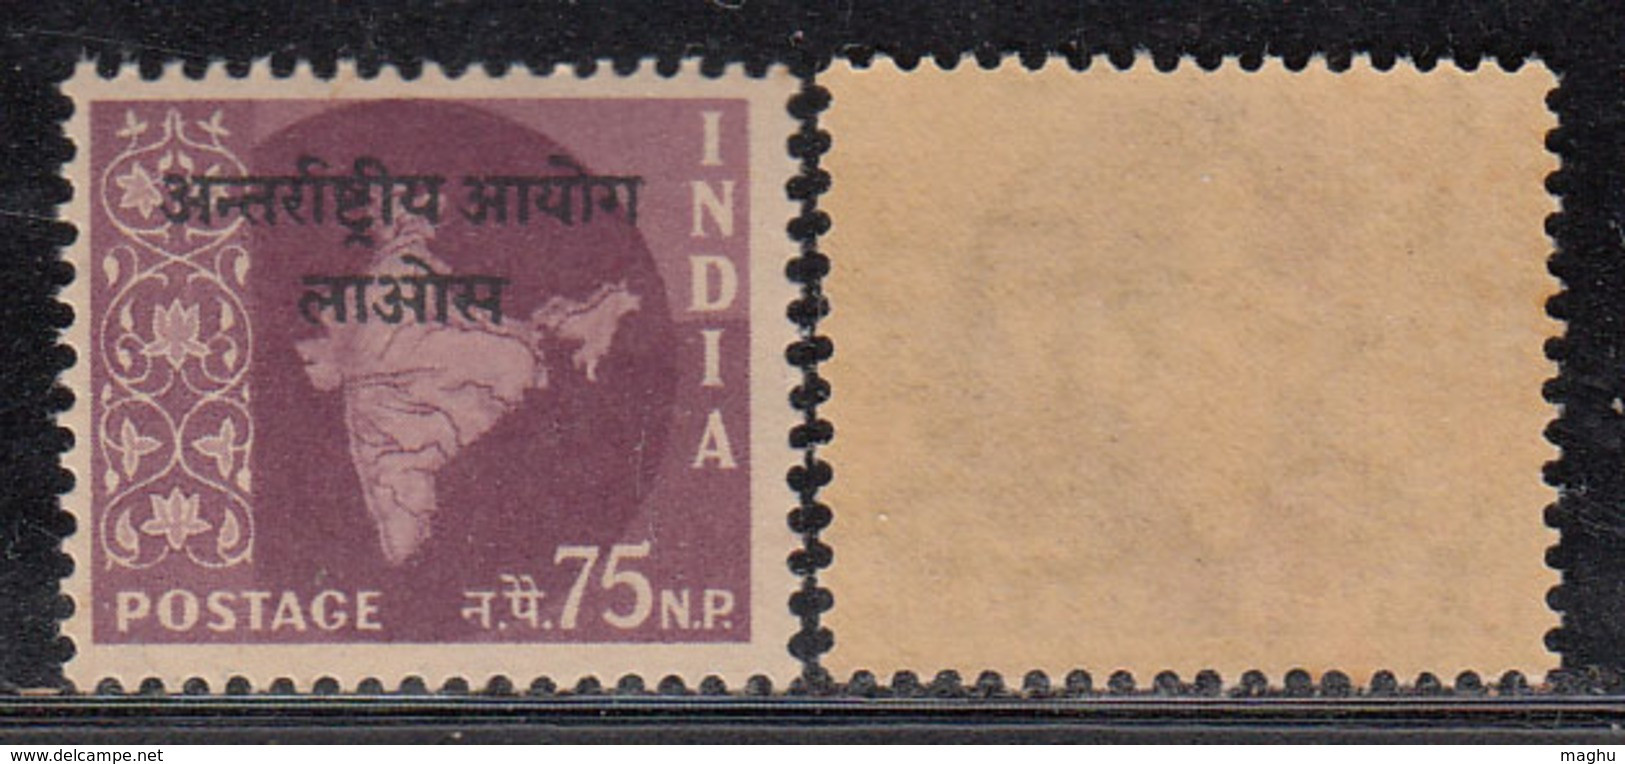 75np Ovpt  Laos On Map Series,  India MNH 1962 - 1965, Ashokan Watermark, - Franquicia Militar